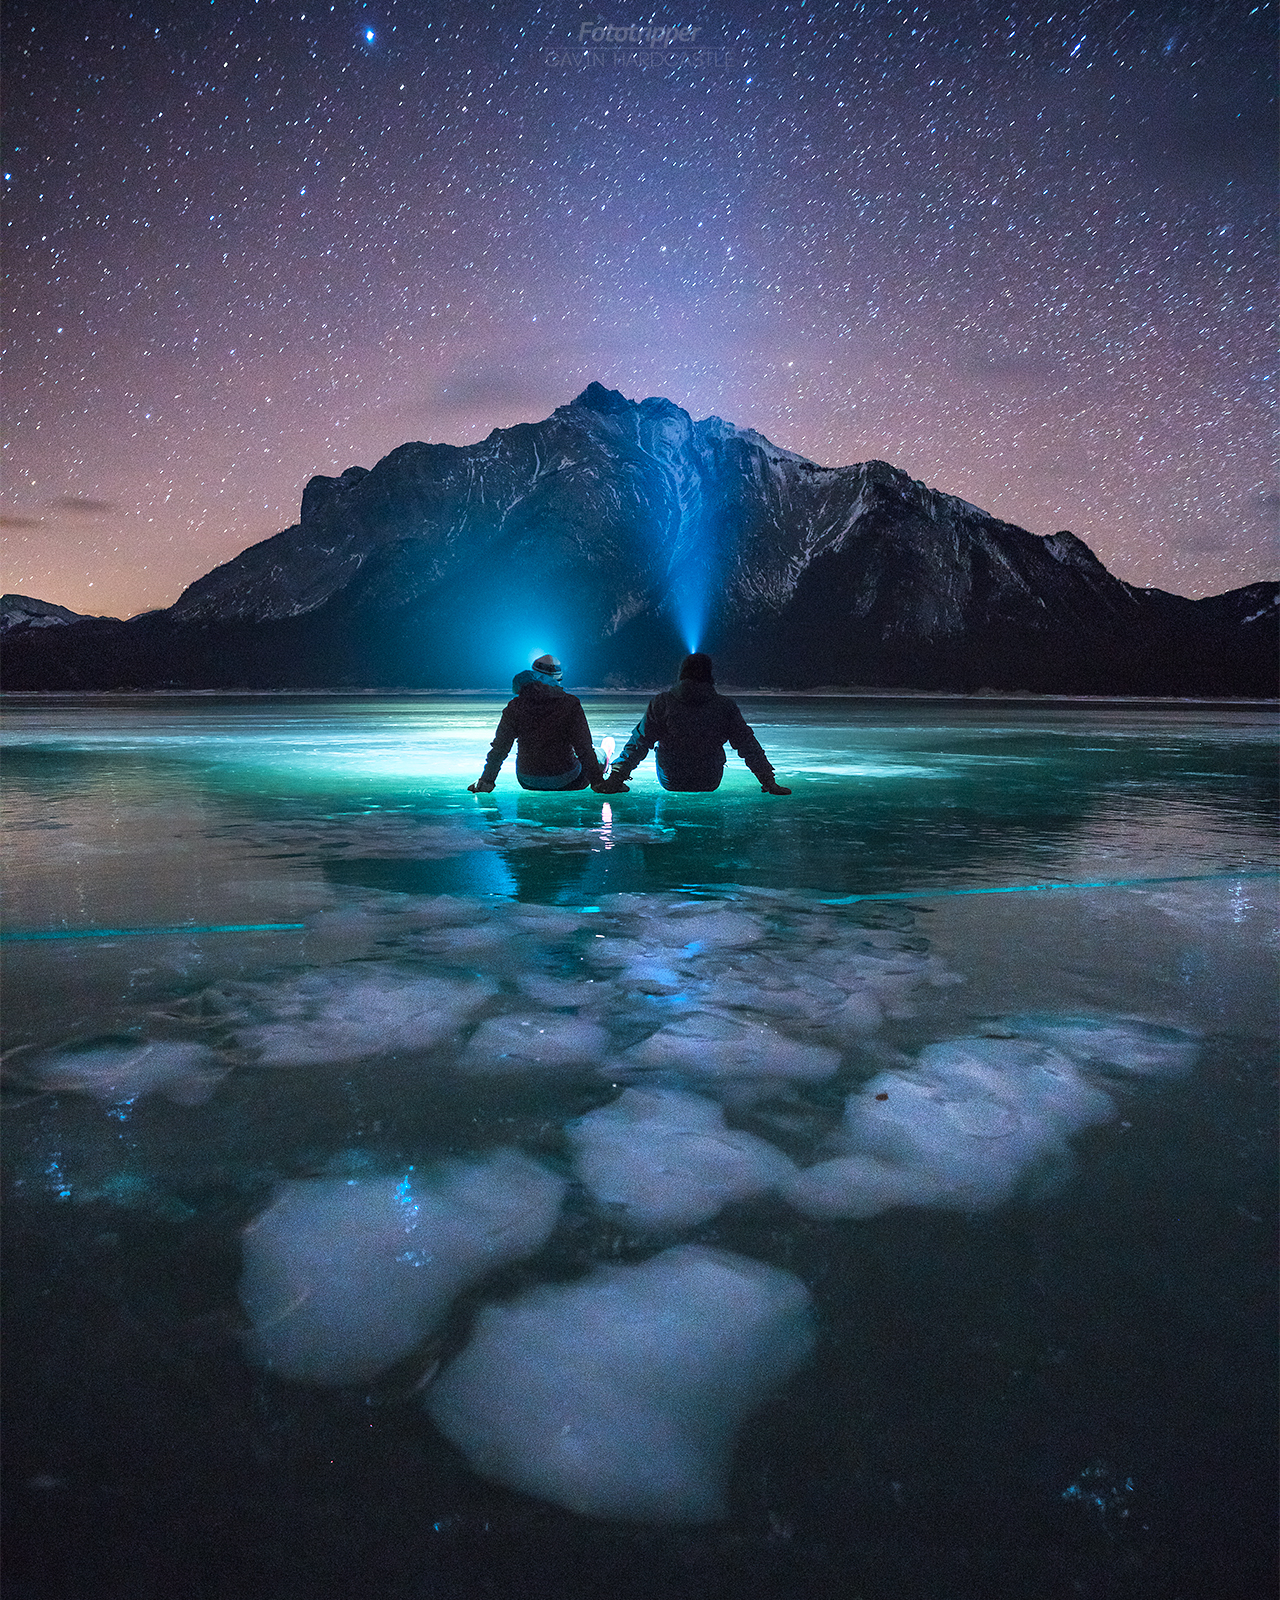 'Facing the Infinite' - Abraham Lake, Alberta